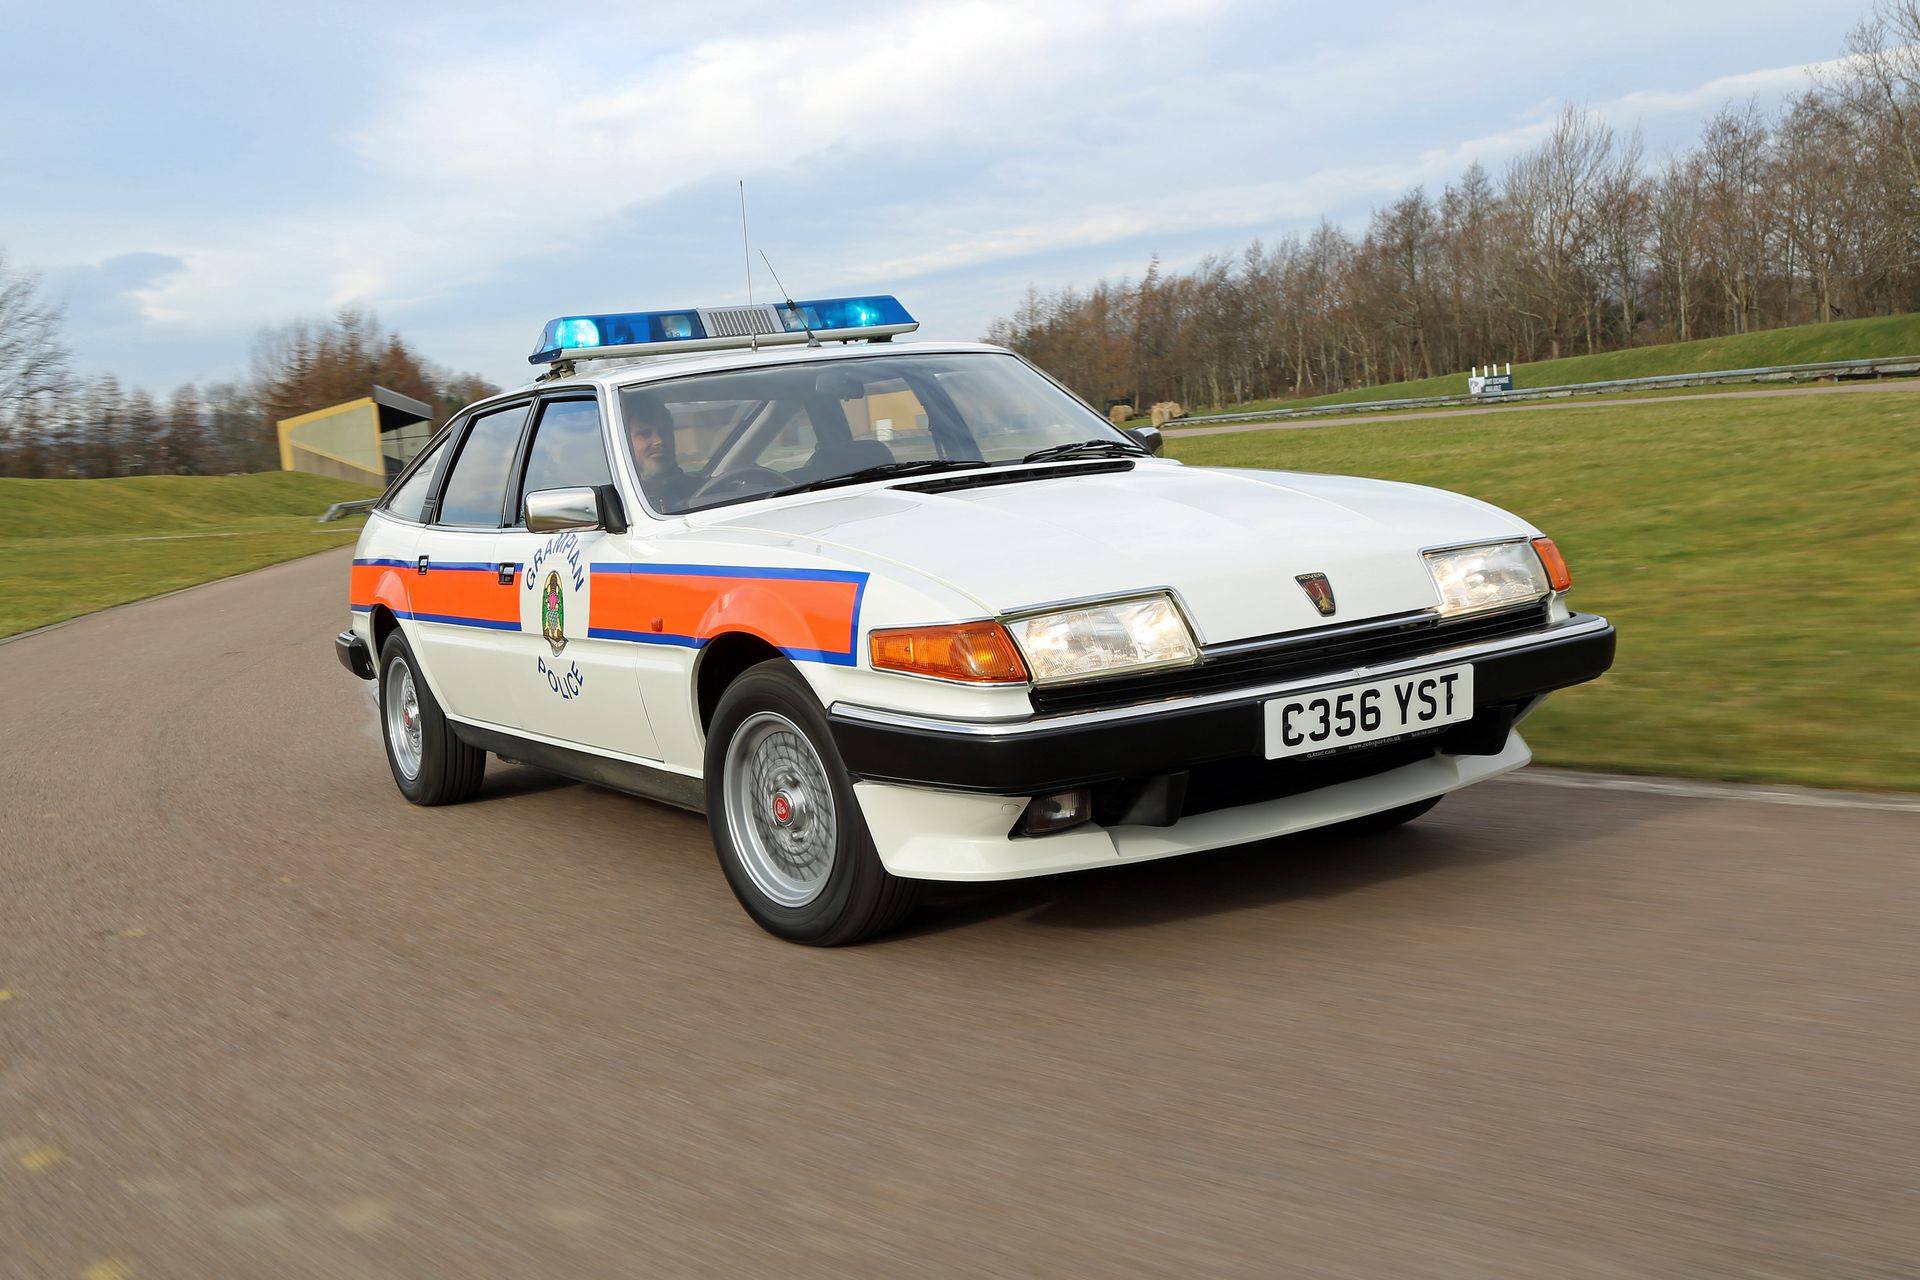 Corgi have produced a scale model of the Rover SD1 Vitesse Police car.